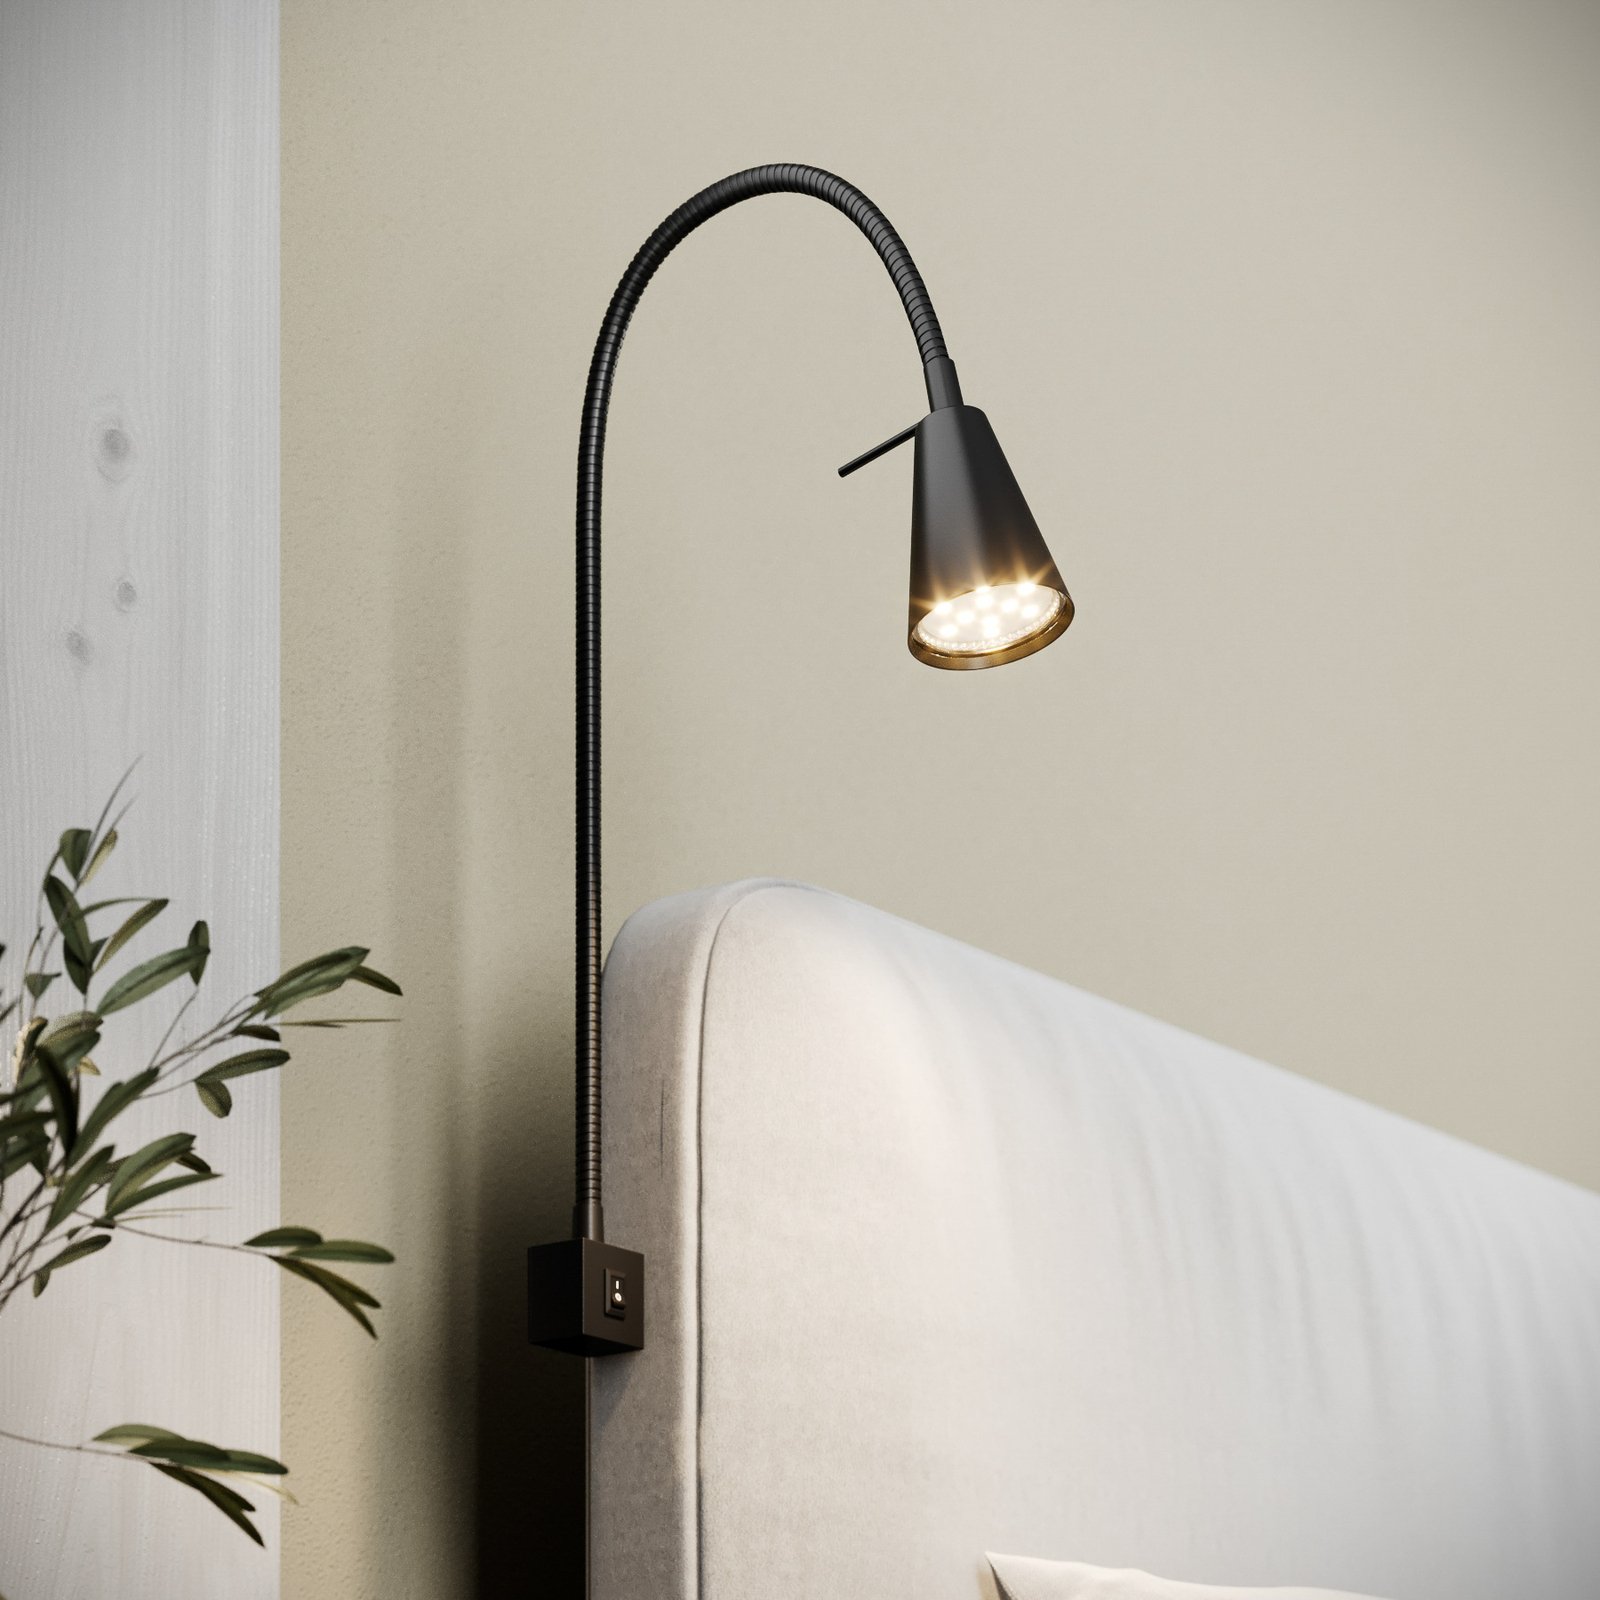 Tuso LED wall lamp, bed-mounted, black